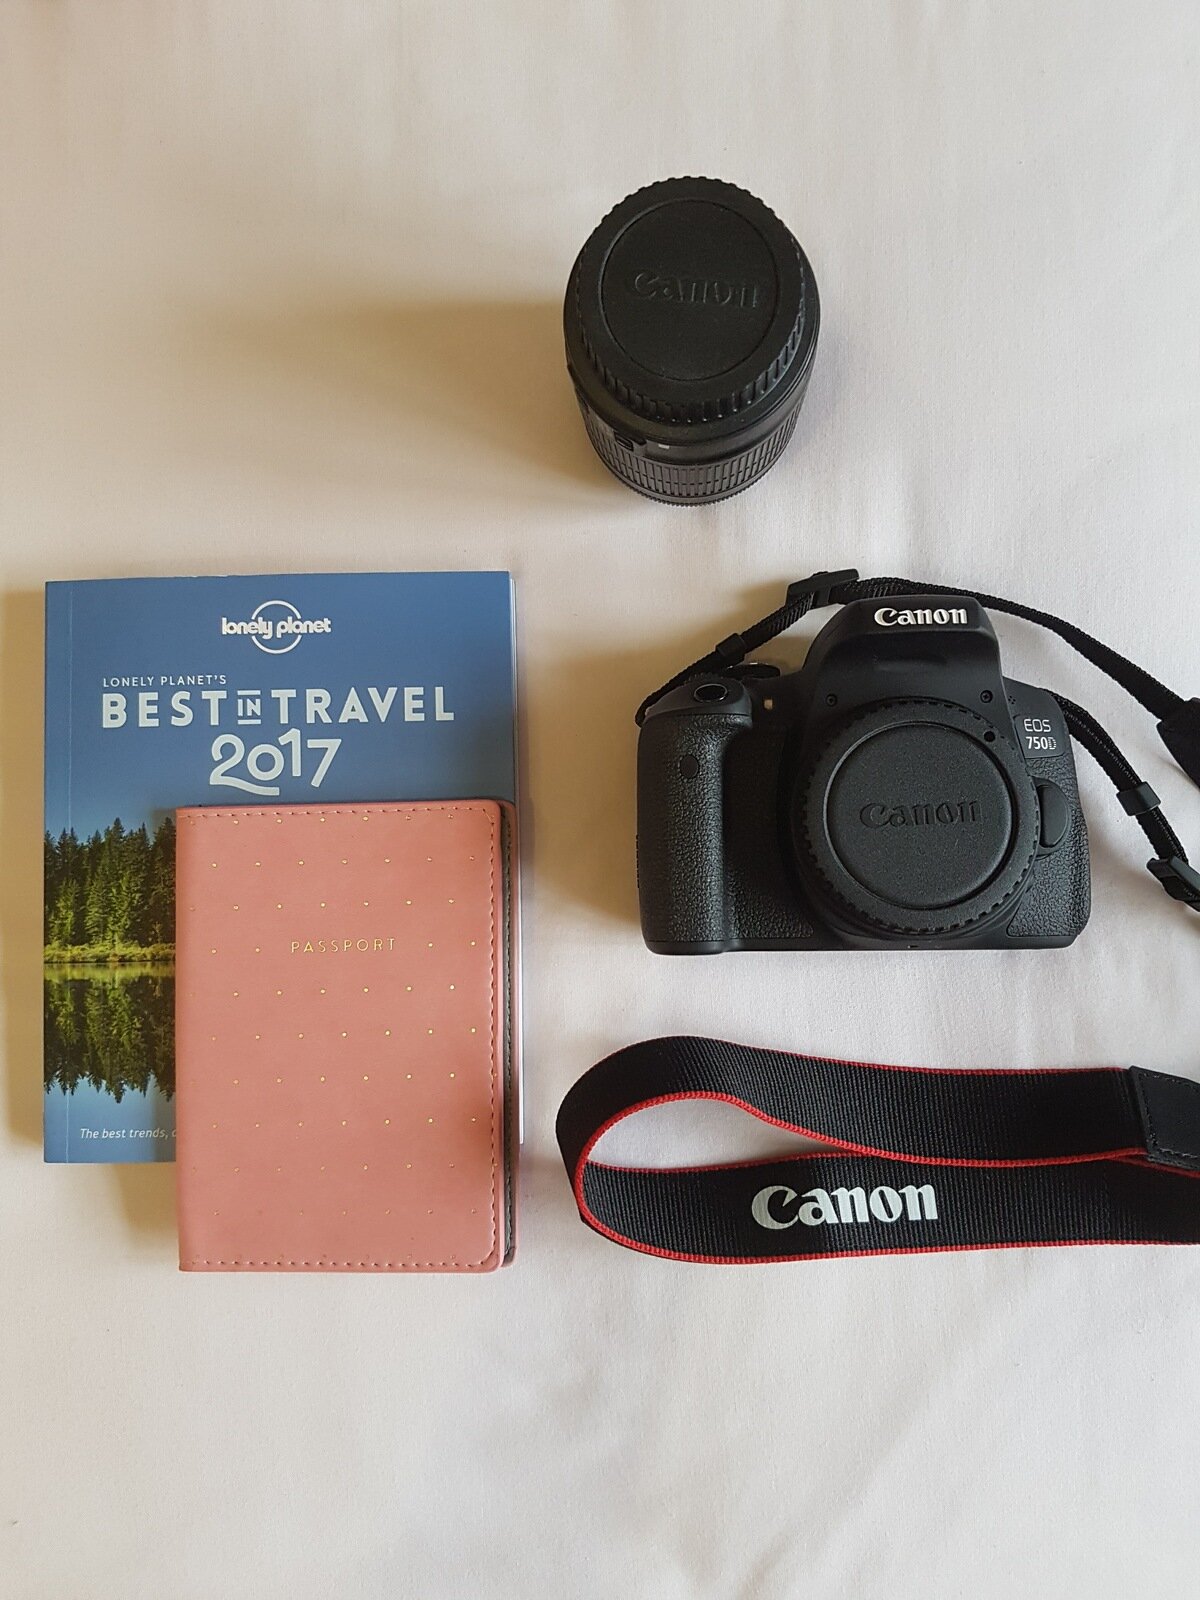 Canon camera, lens and passport